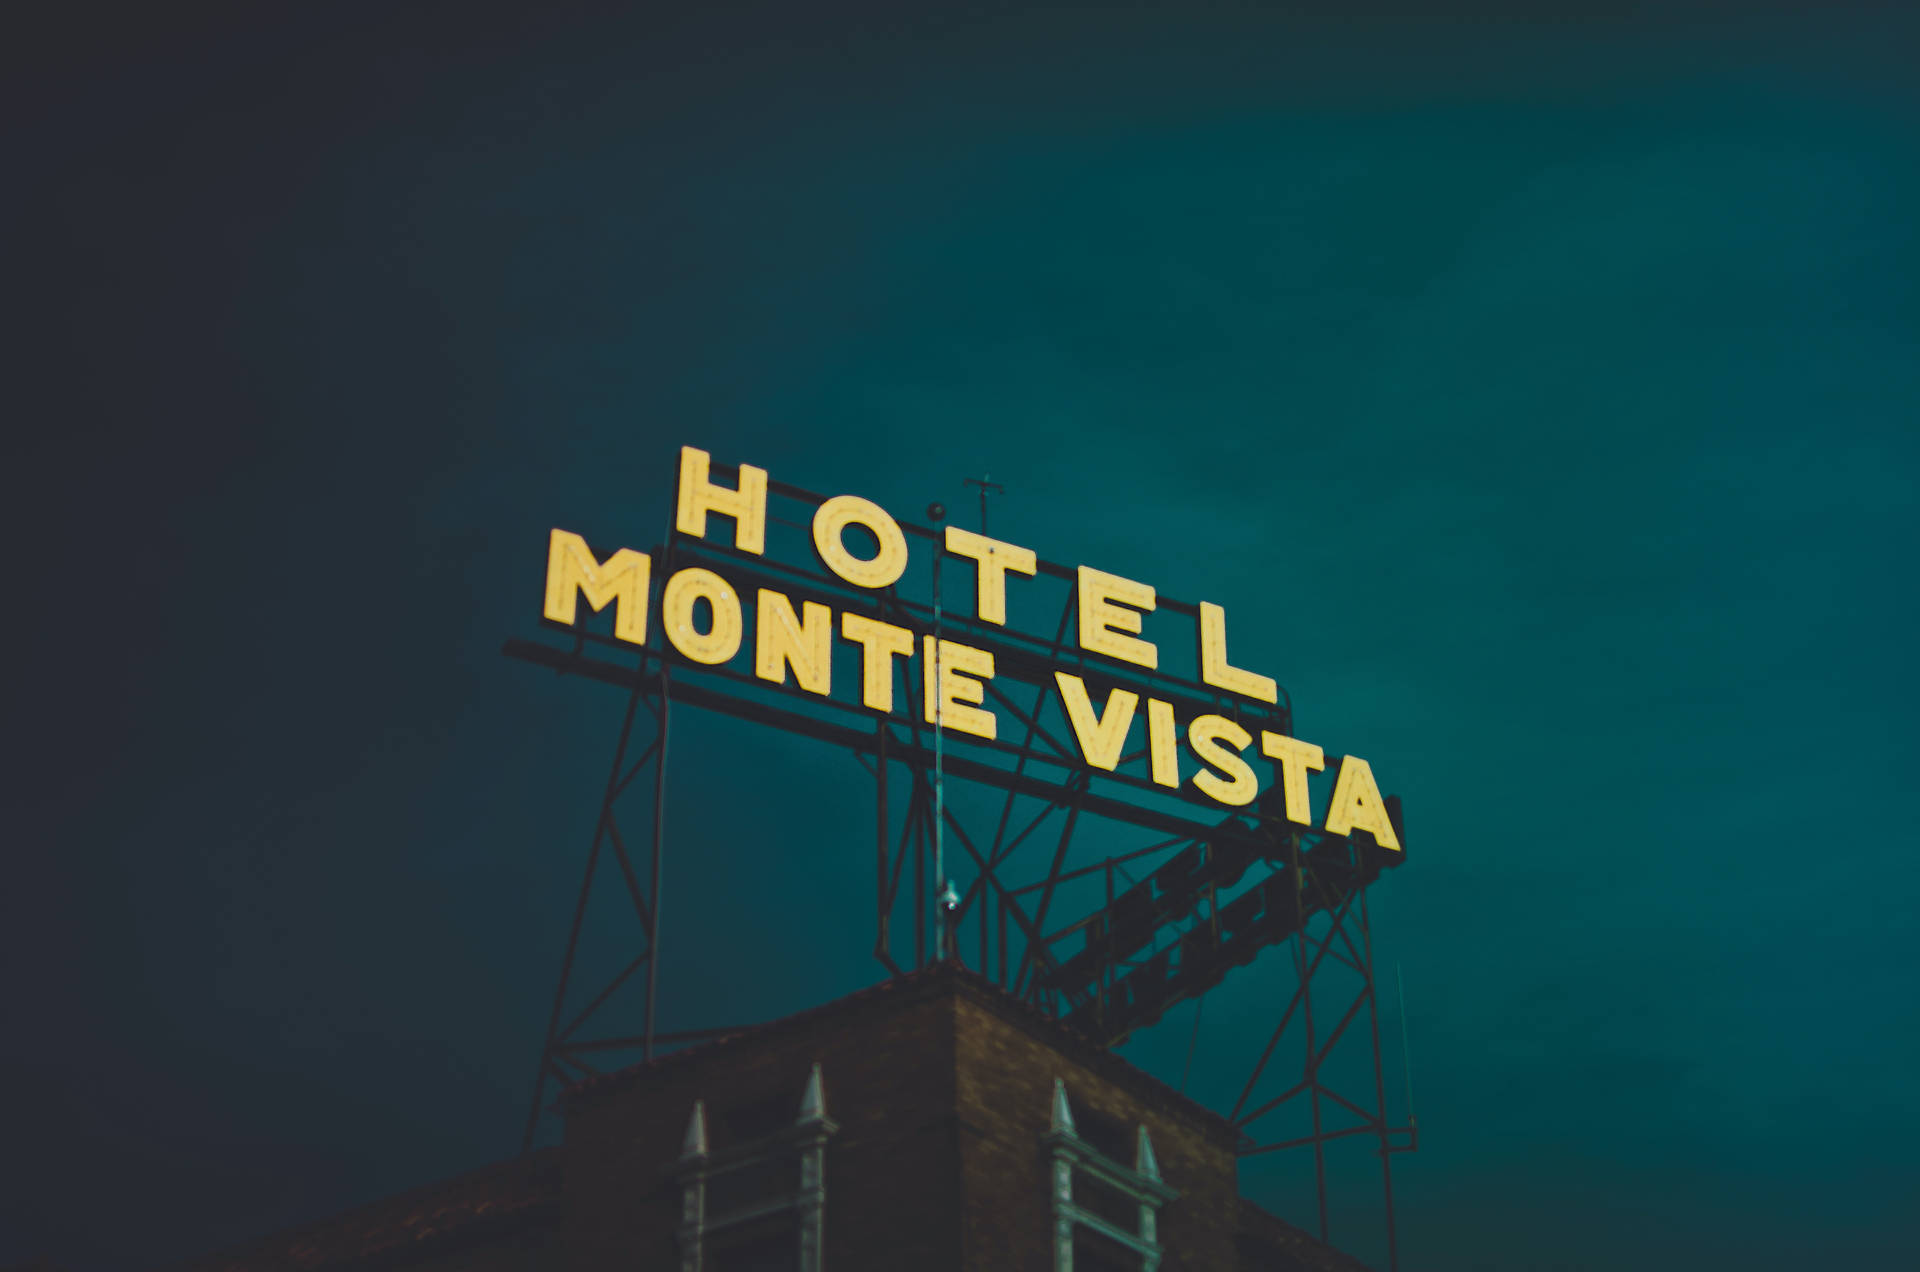 Sinaldo Hotel Monte Vista. Papel de Parede